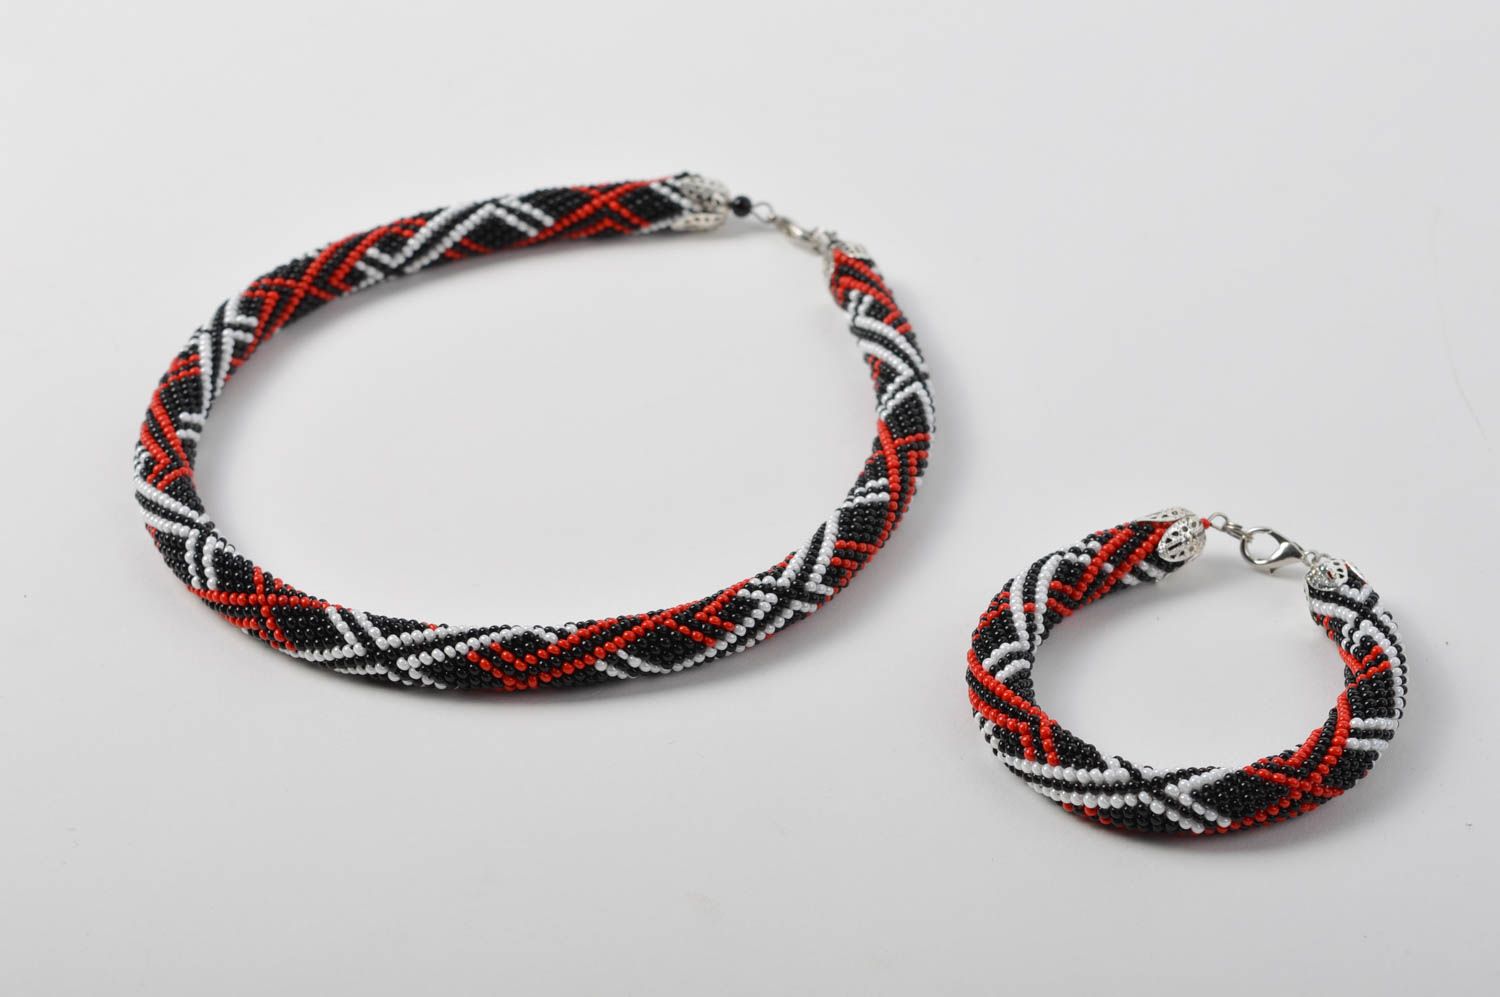 Handmade beaded cord necklace beaded cord bracelet designs jewelry set 2 pieces photo 3